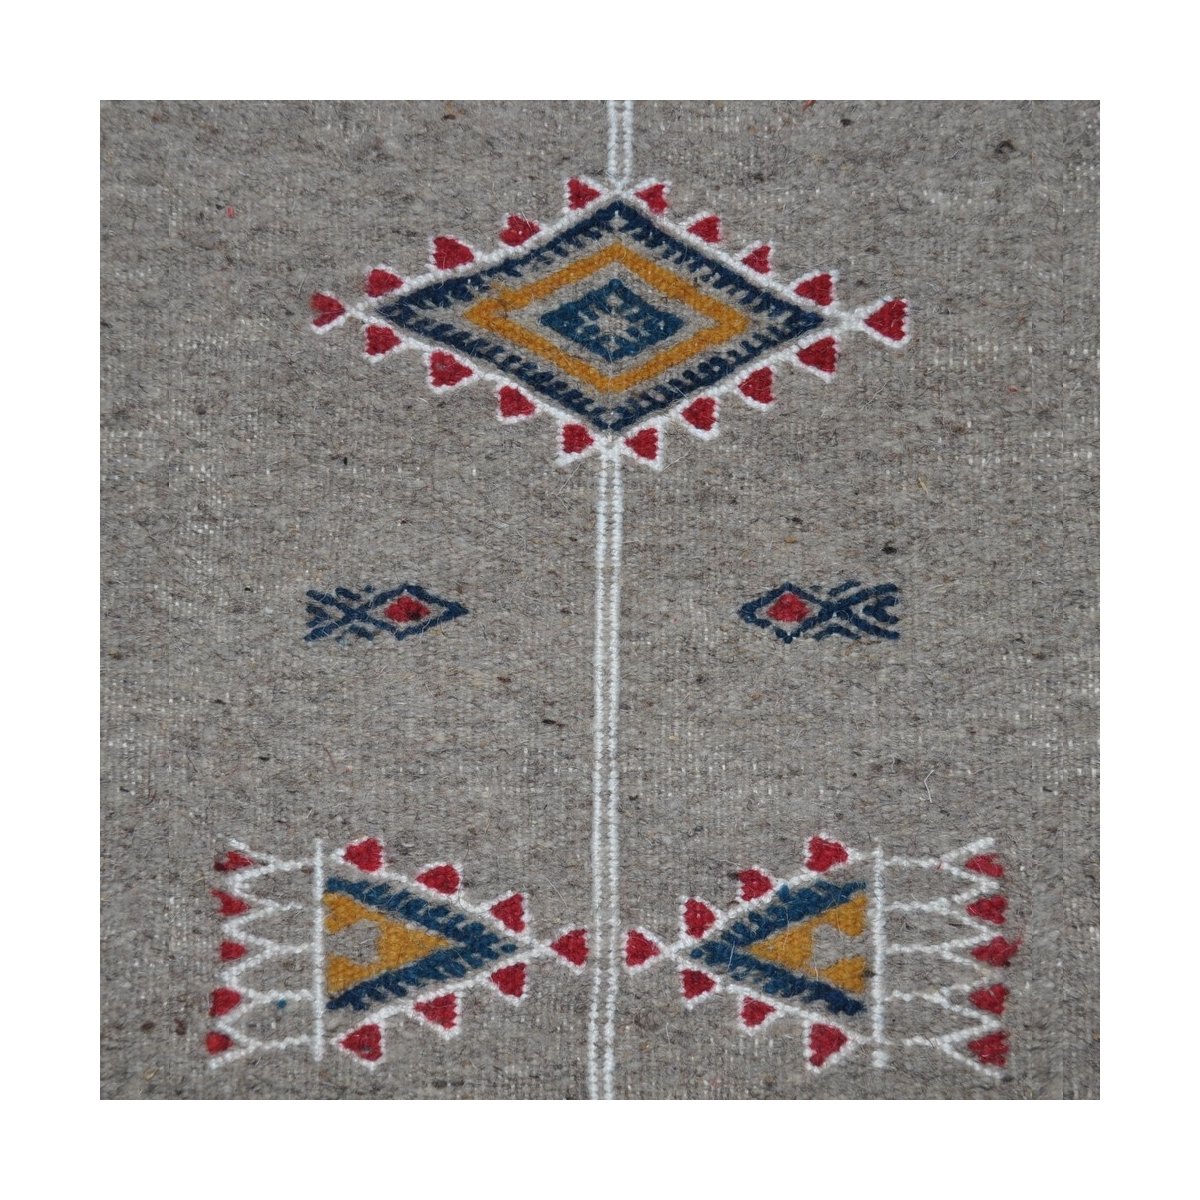 Berber tapijt Tapijt Kilim Messadine 55x105 Grijs/Rood/Blauw/Jeel (Handgeweven, Wol, Tunesië) Tunesisch kilimdeken, Marokkaanse 